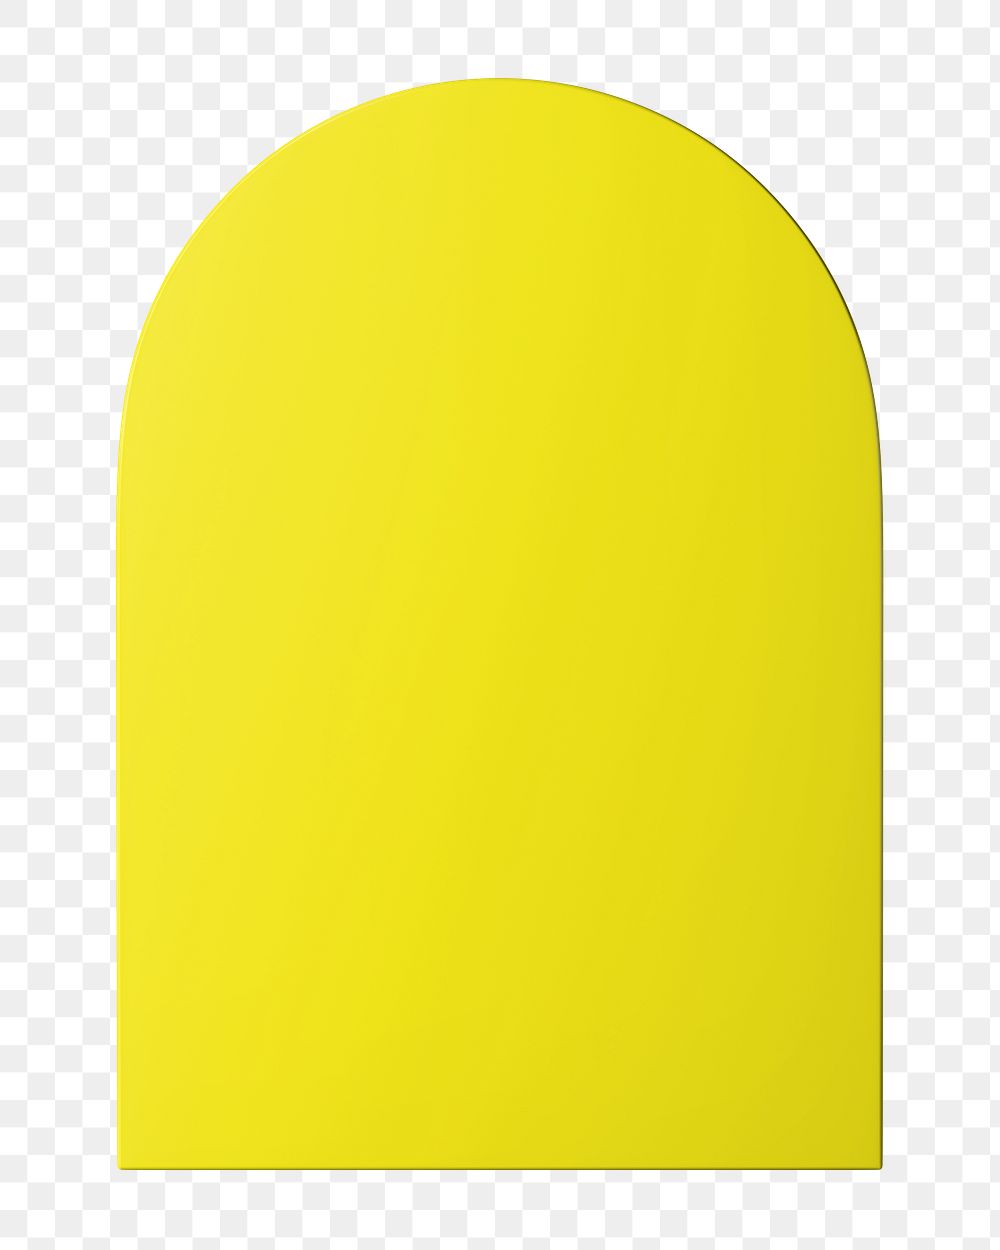 Yellow arch shape png sticker, 3D element, transparent background